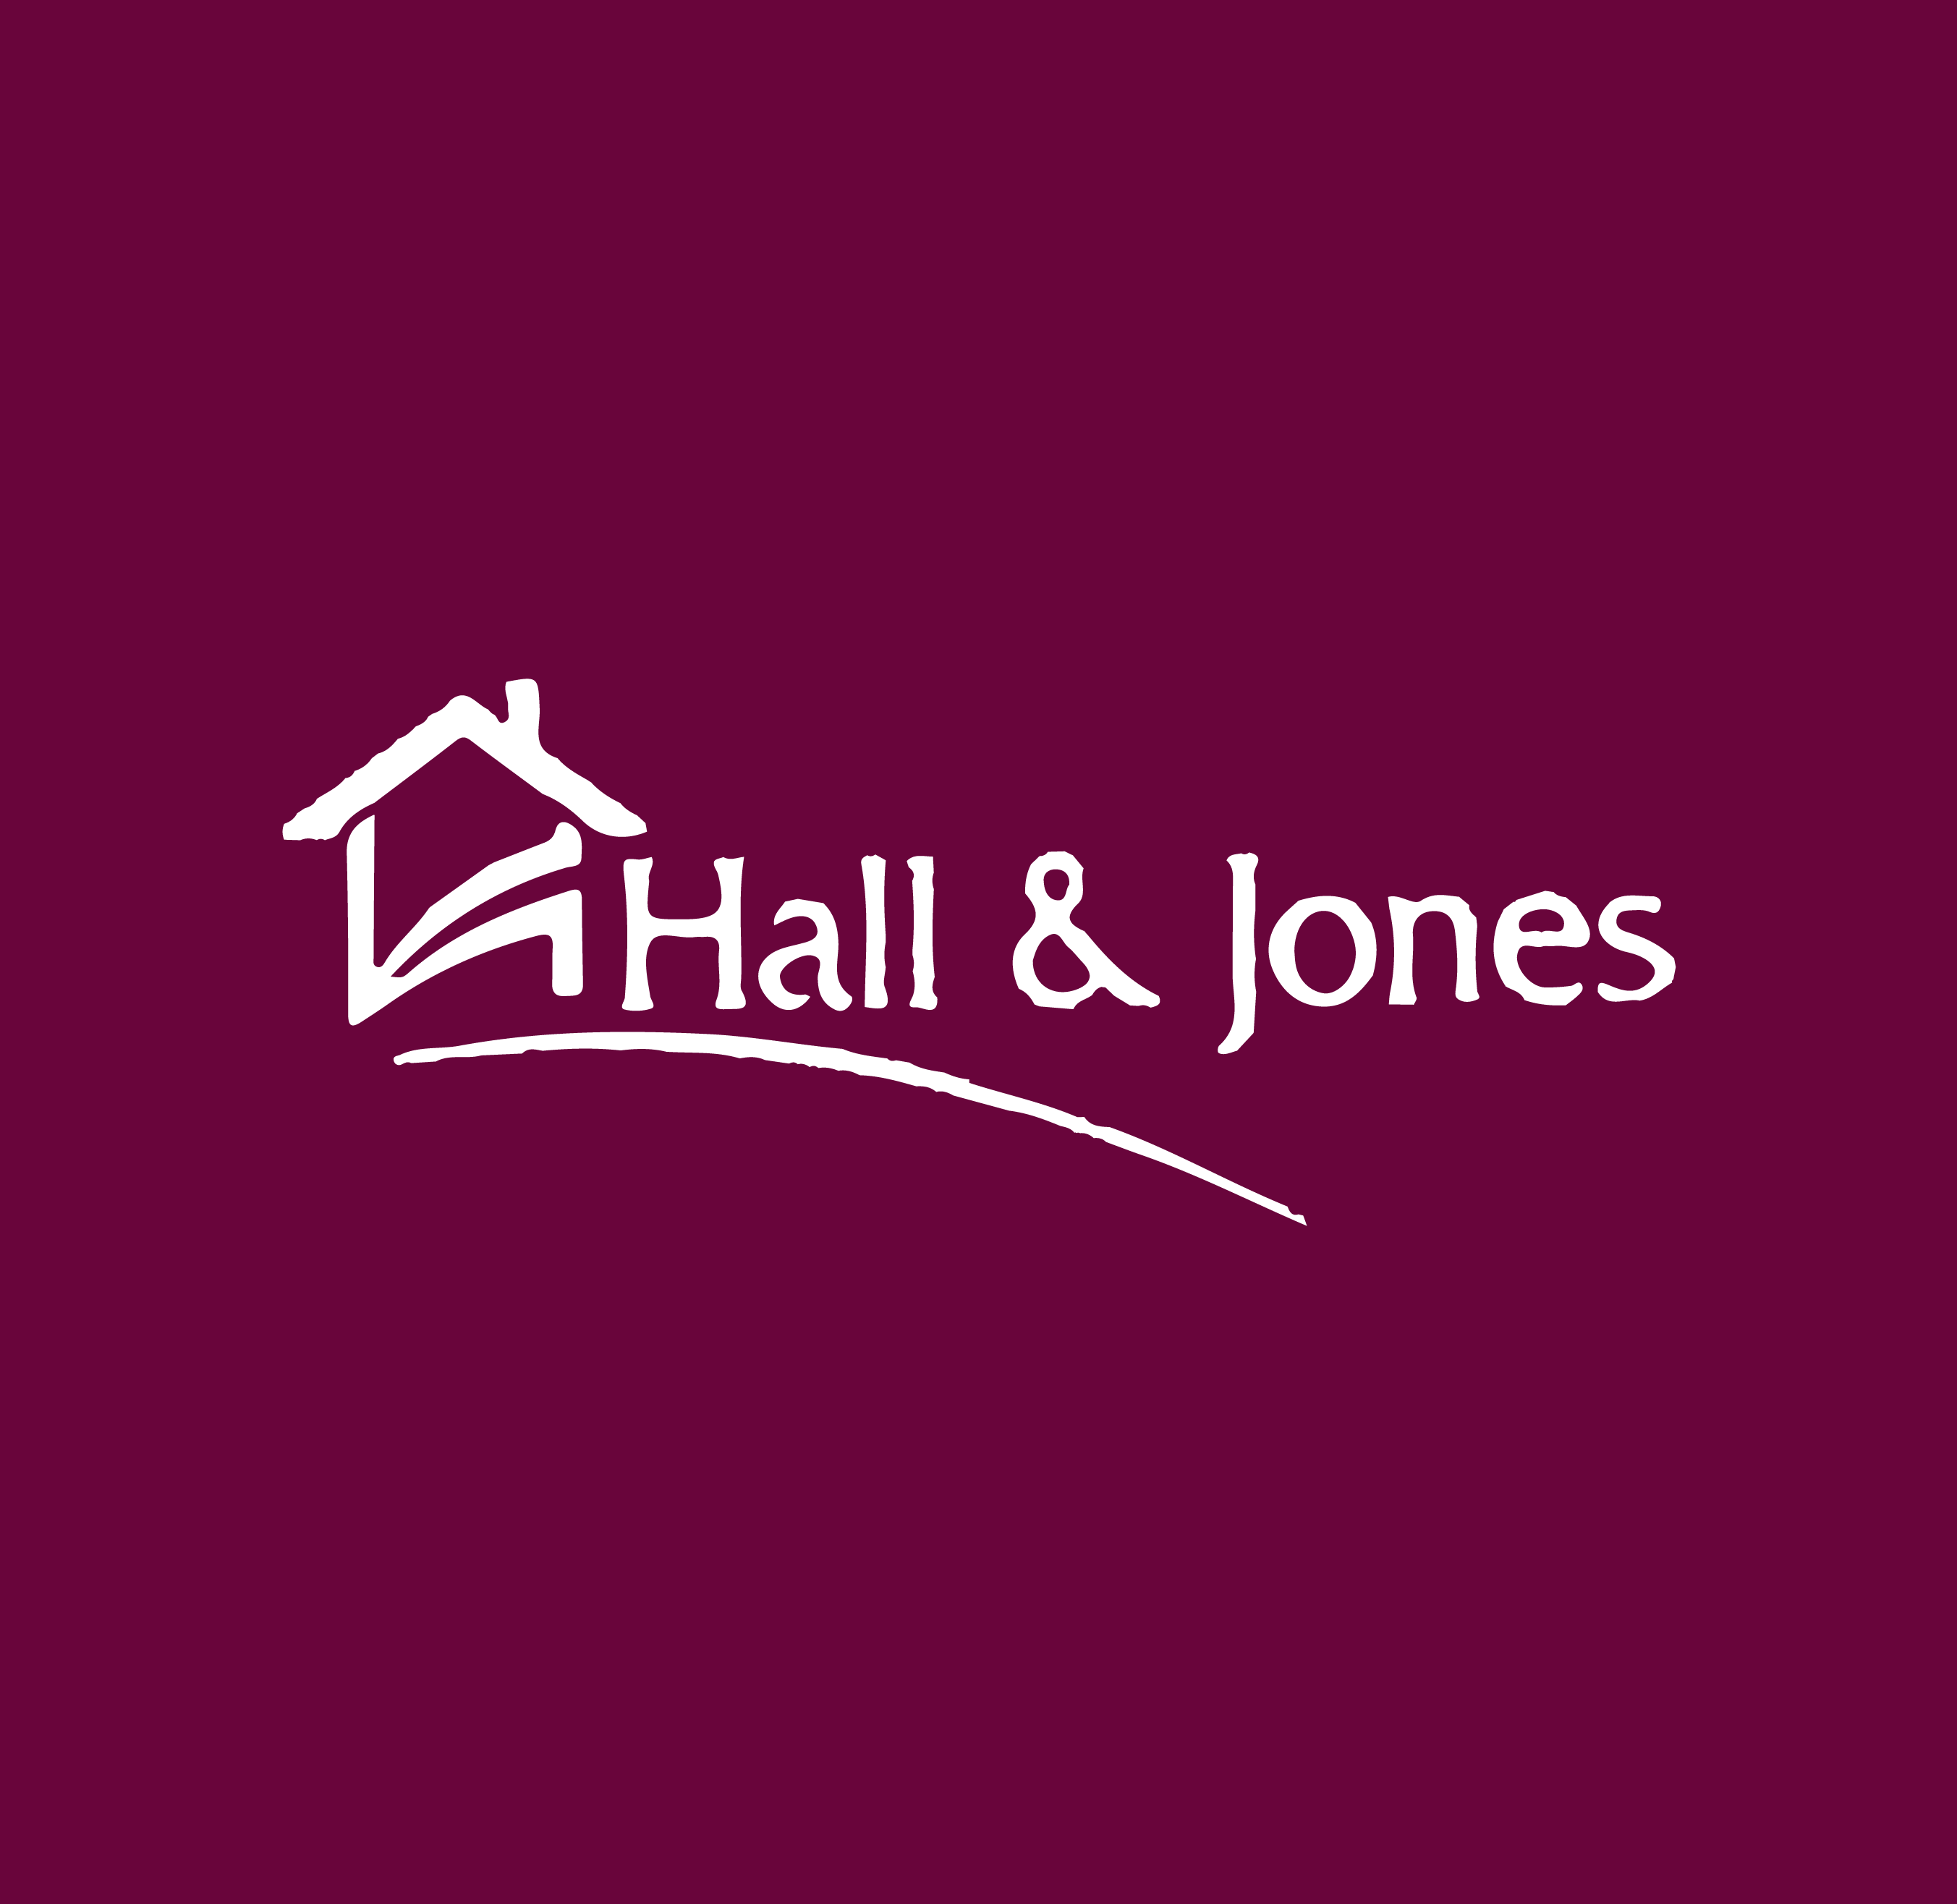 Hall & Jones